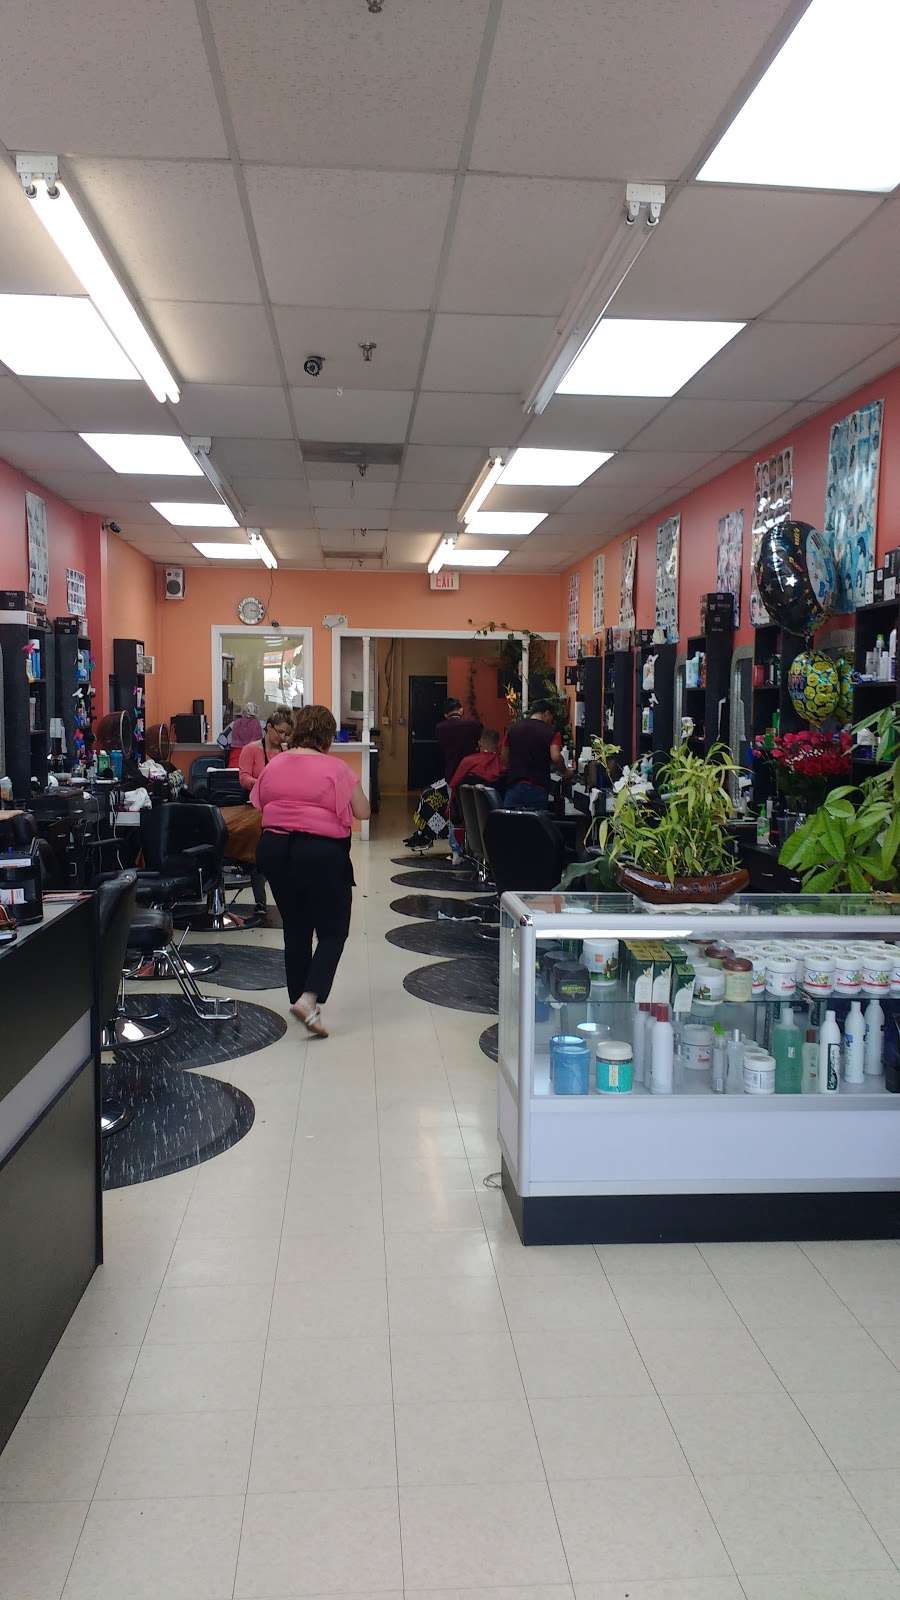 Leticia Stylist Barber Shop | 7771 Sudley Rd, Manassas, VA 20109, USA | Phone: (703) 393-8221